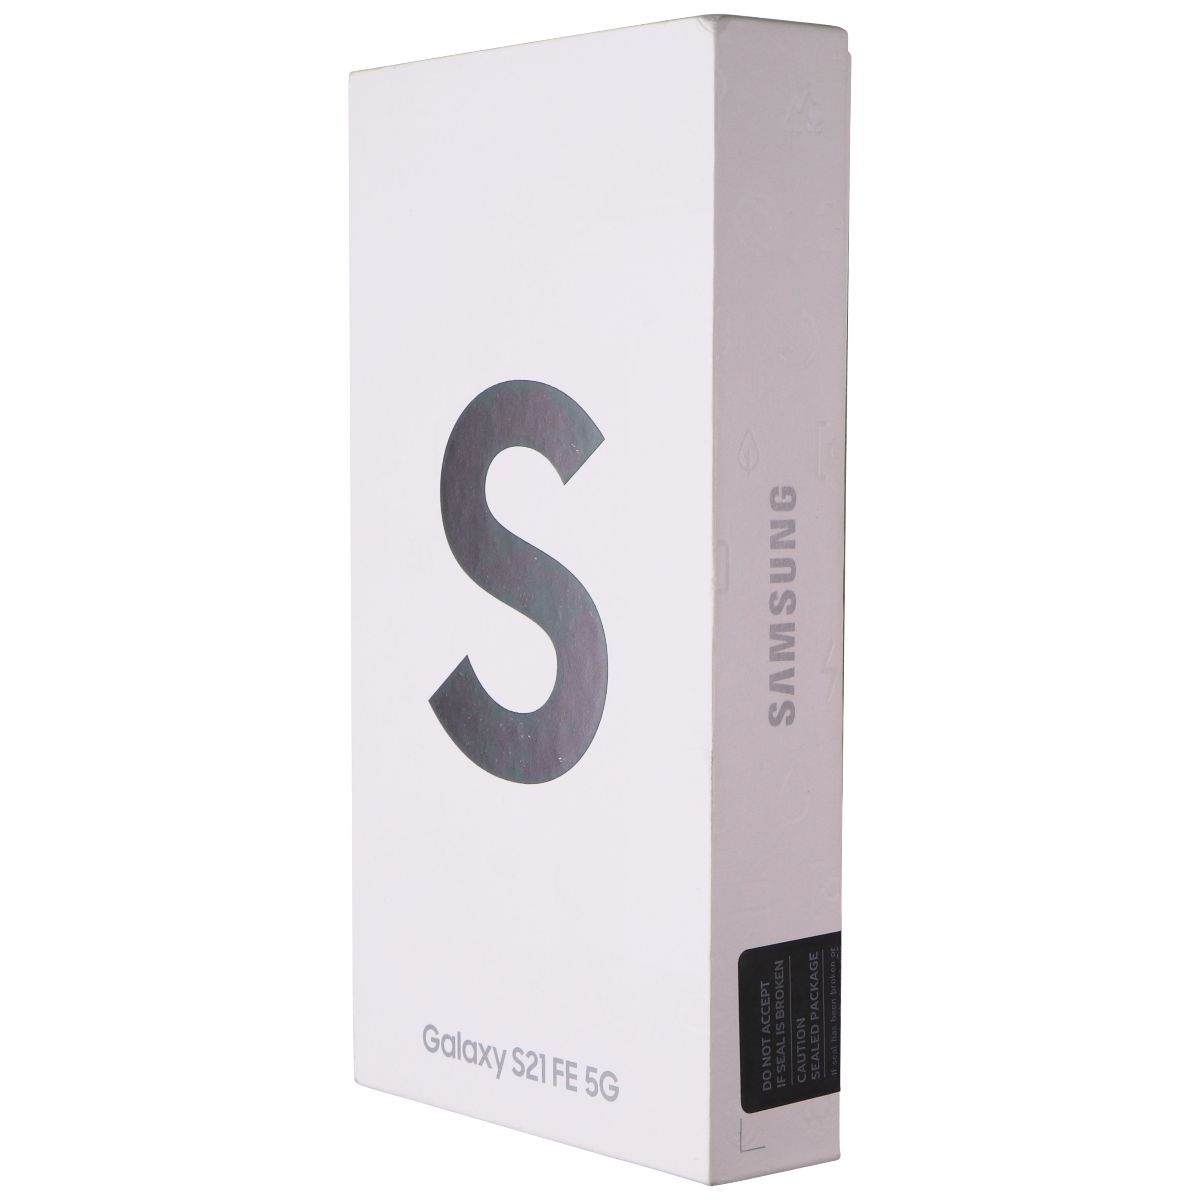 Samsung Galaxy S21 FE 5G (6.4-in) Smartphone SM-G990U Unlocked - 128GB/Graphite